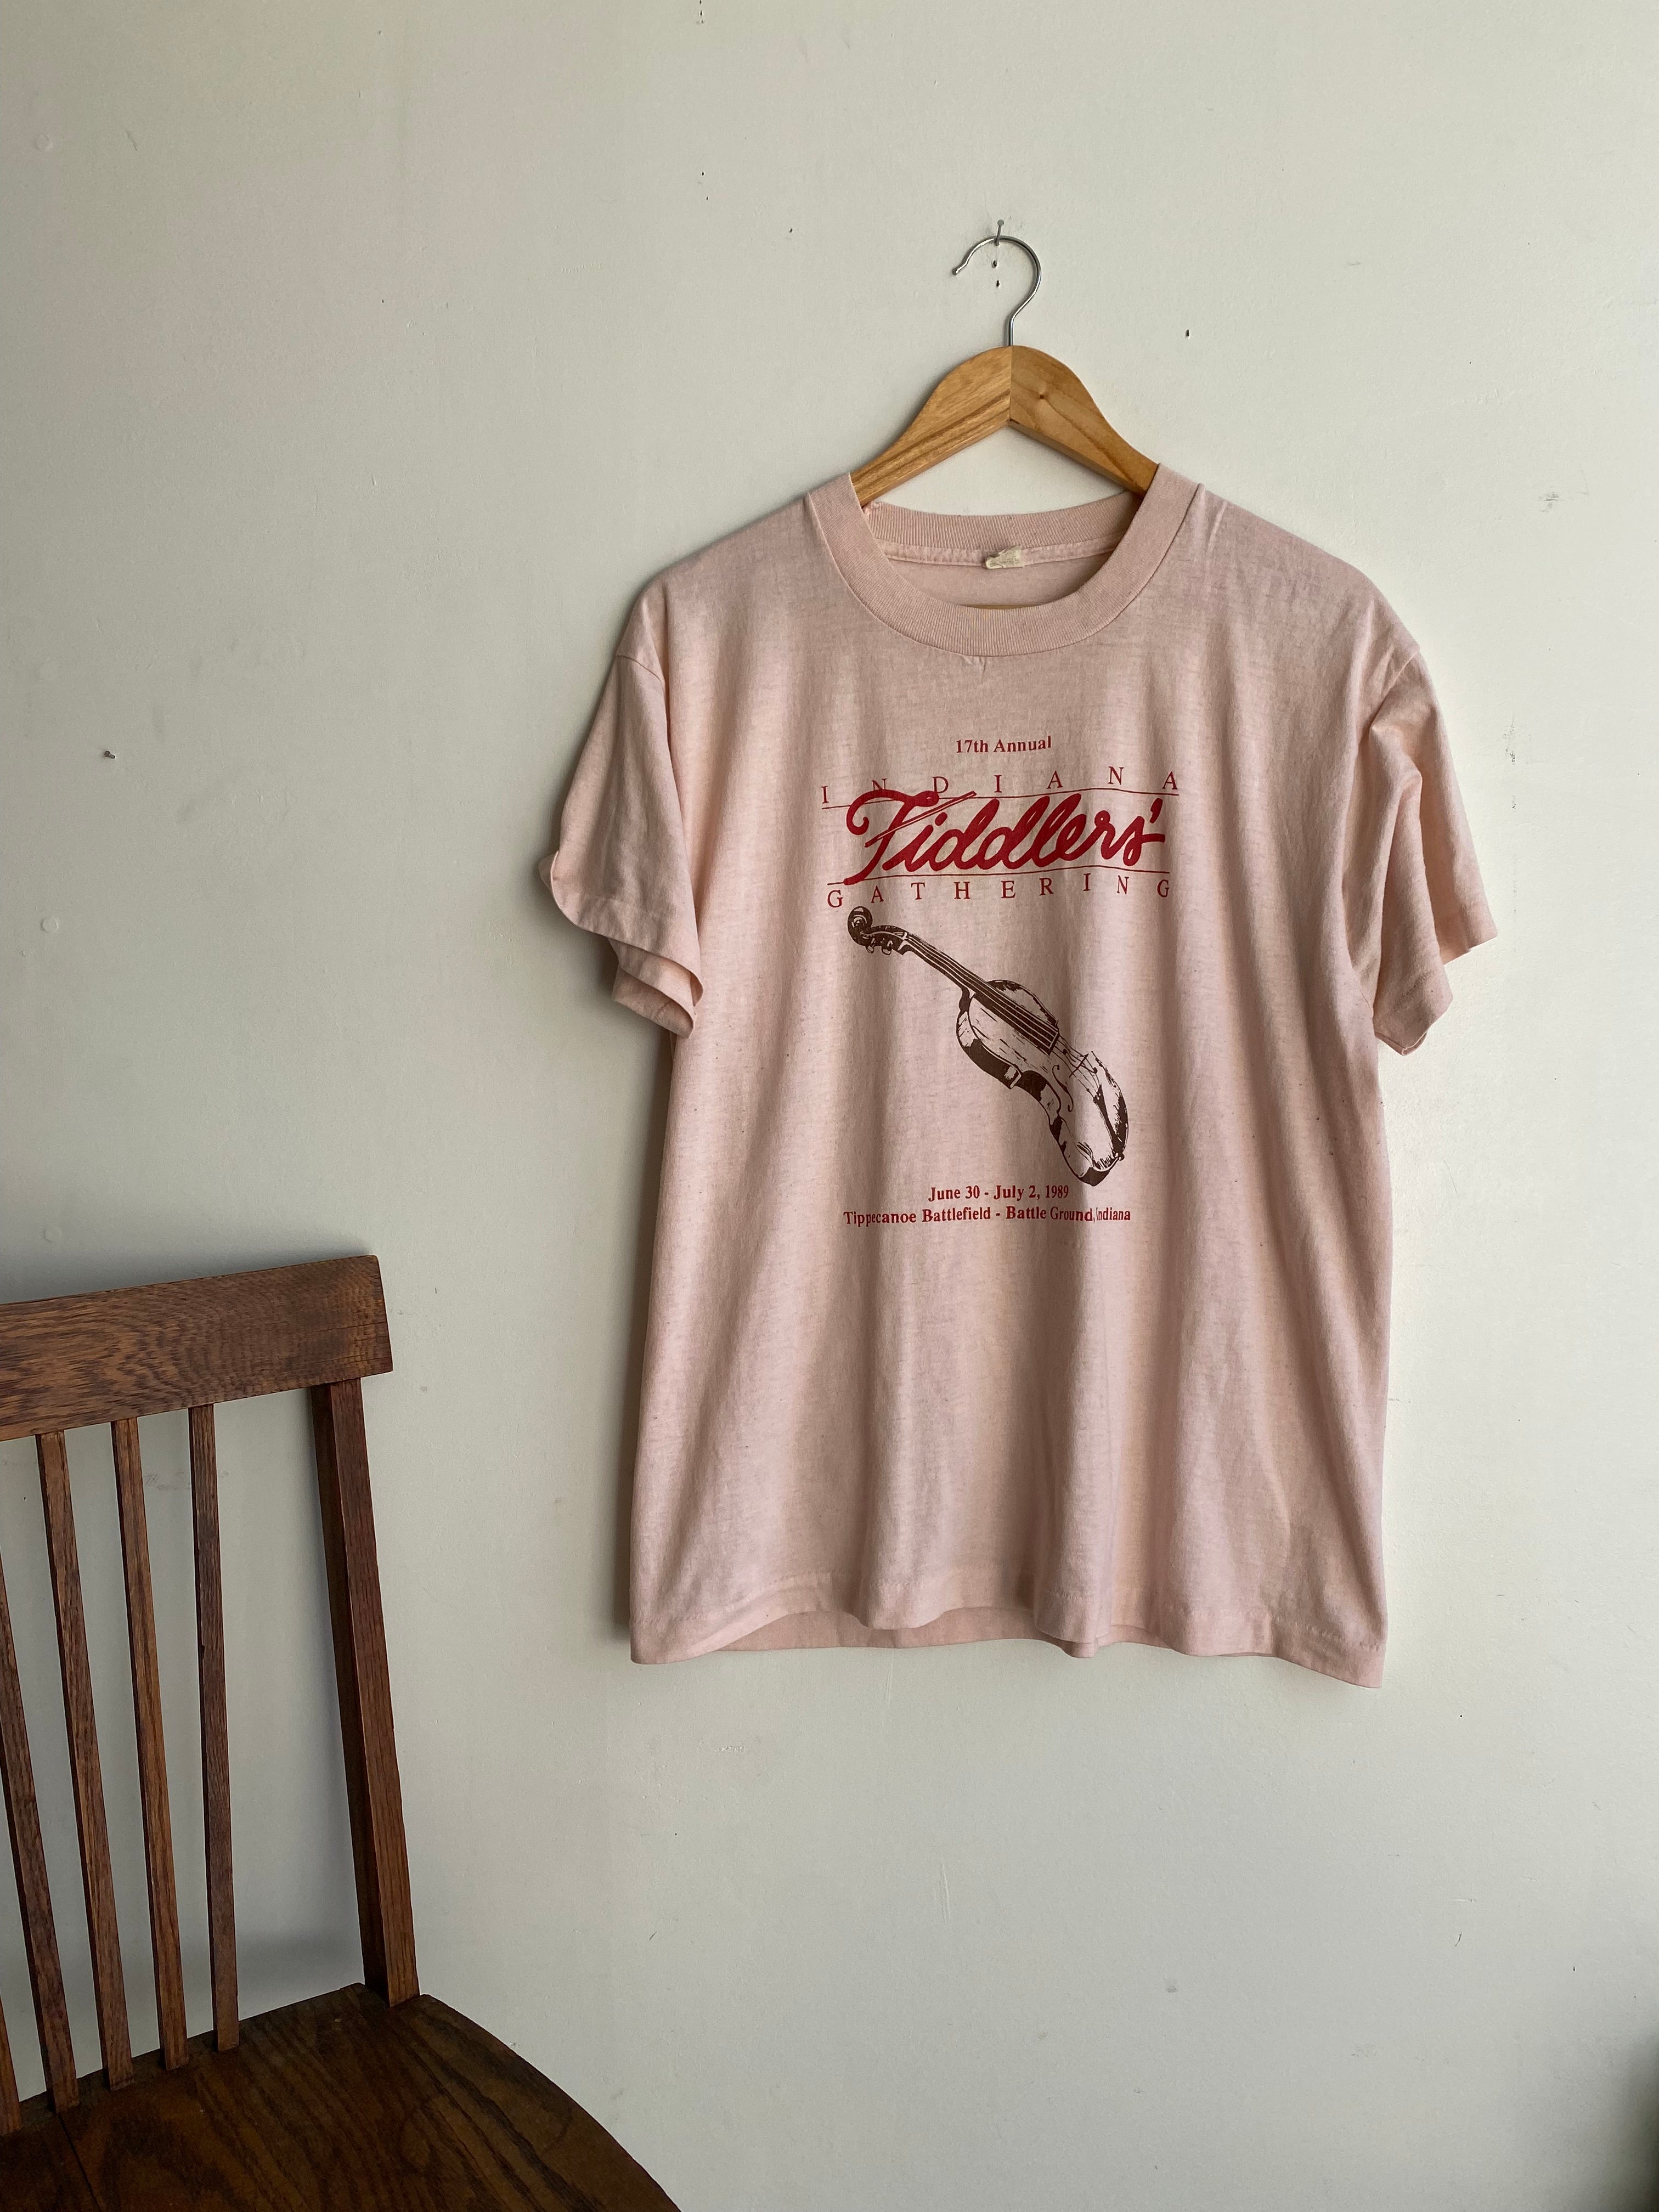 1980s Fiddler's Gathering T-Shirt (M)